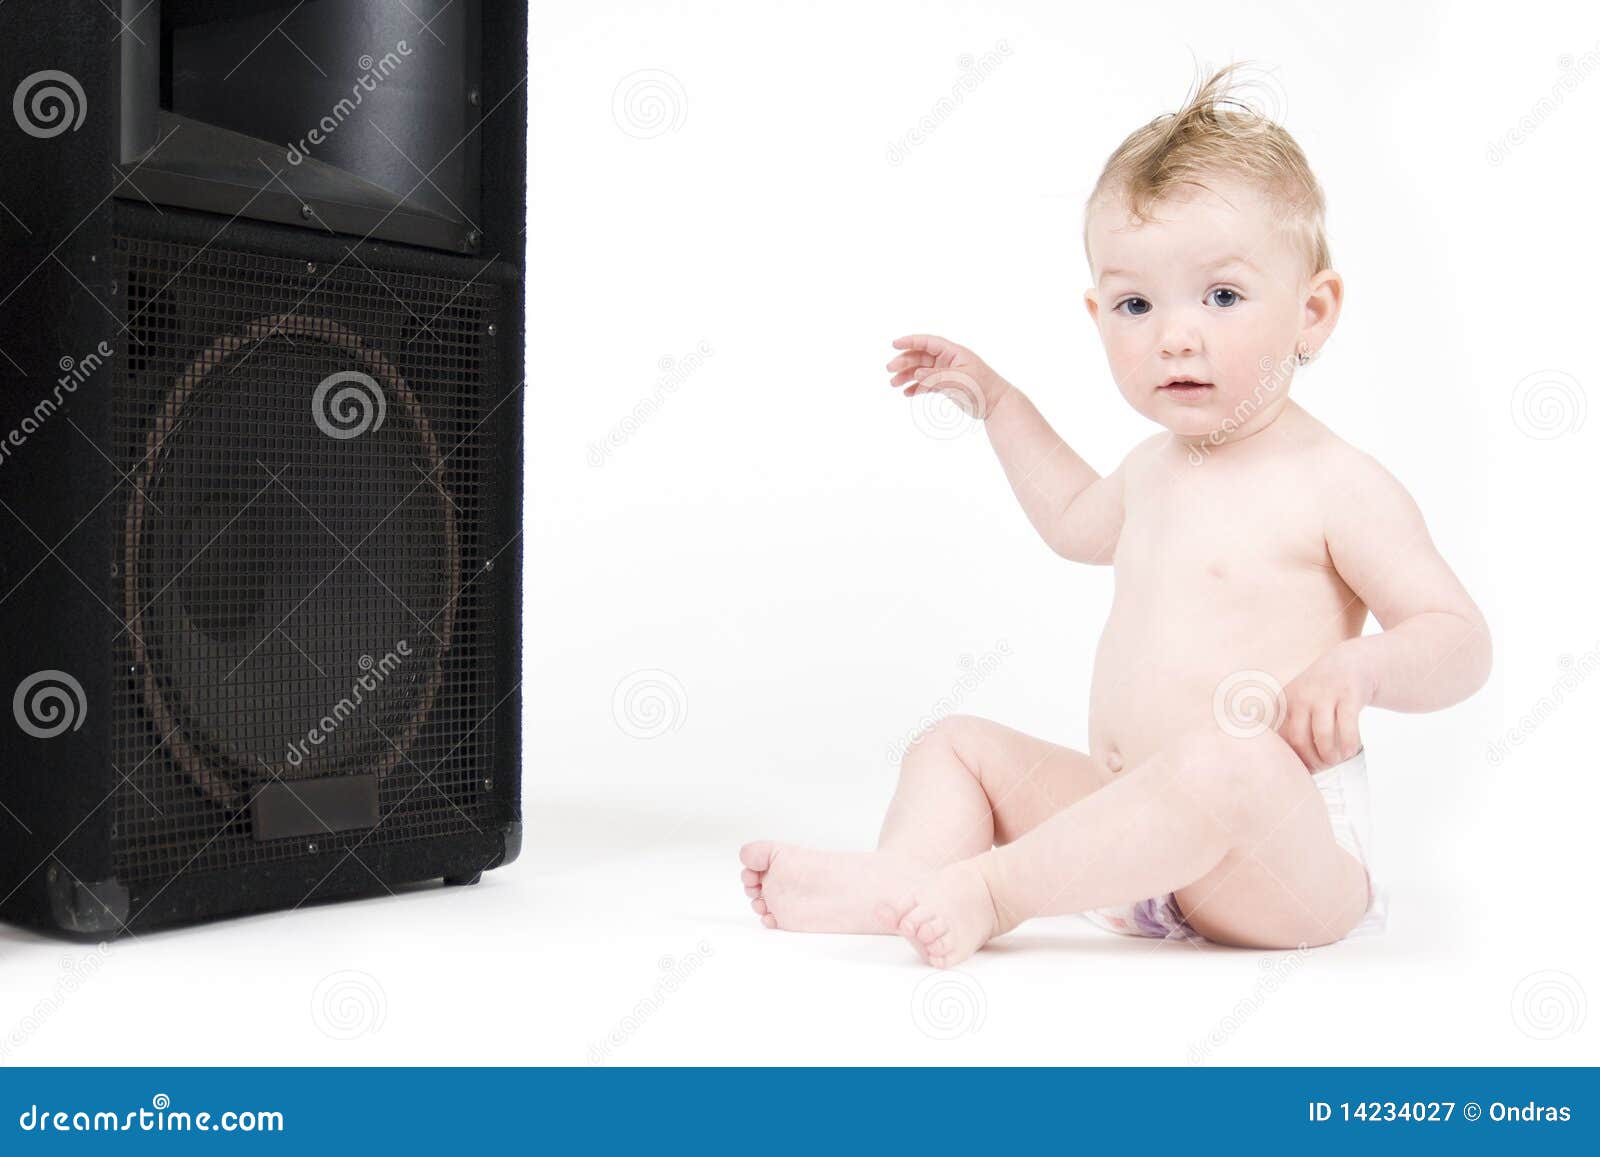 baby sitting in front of loudspeaker